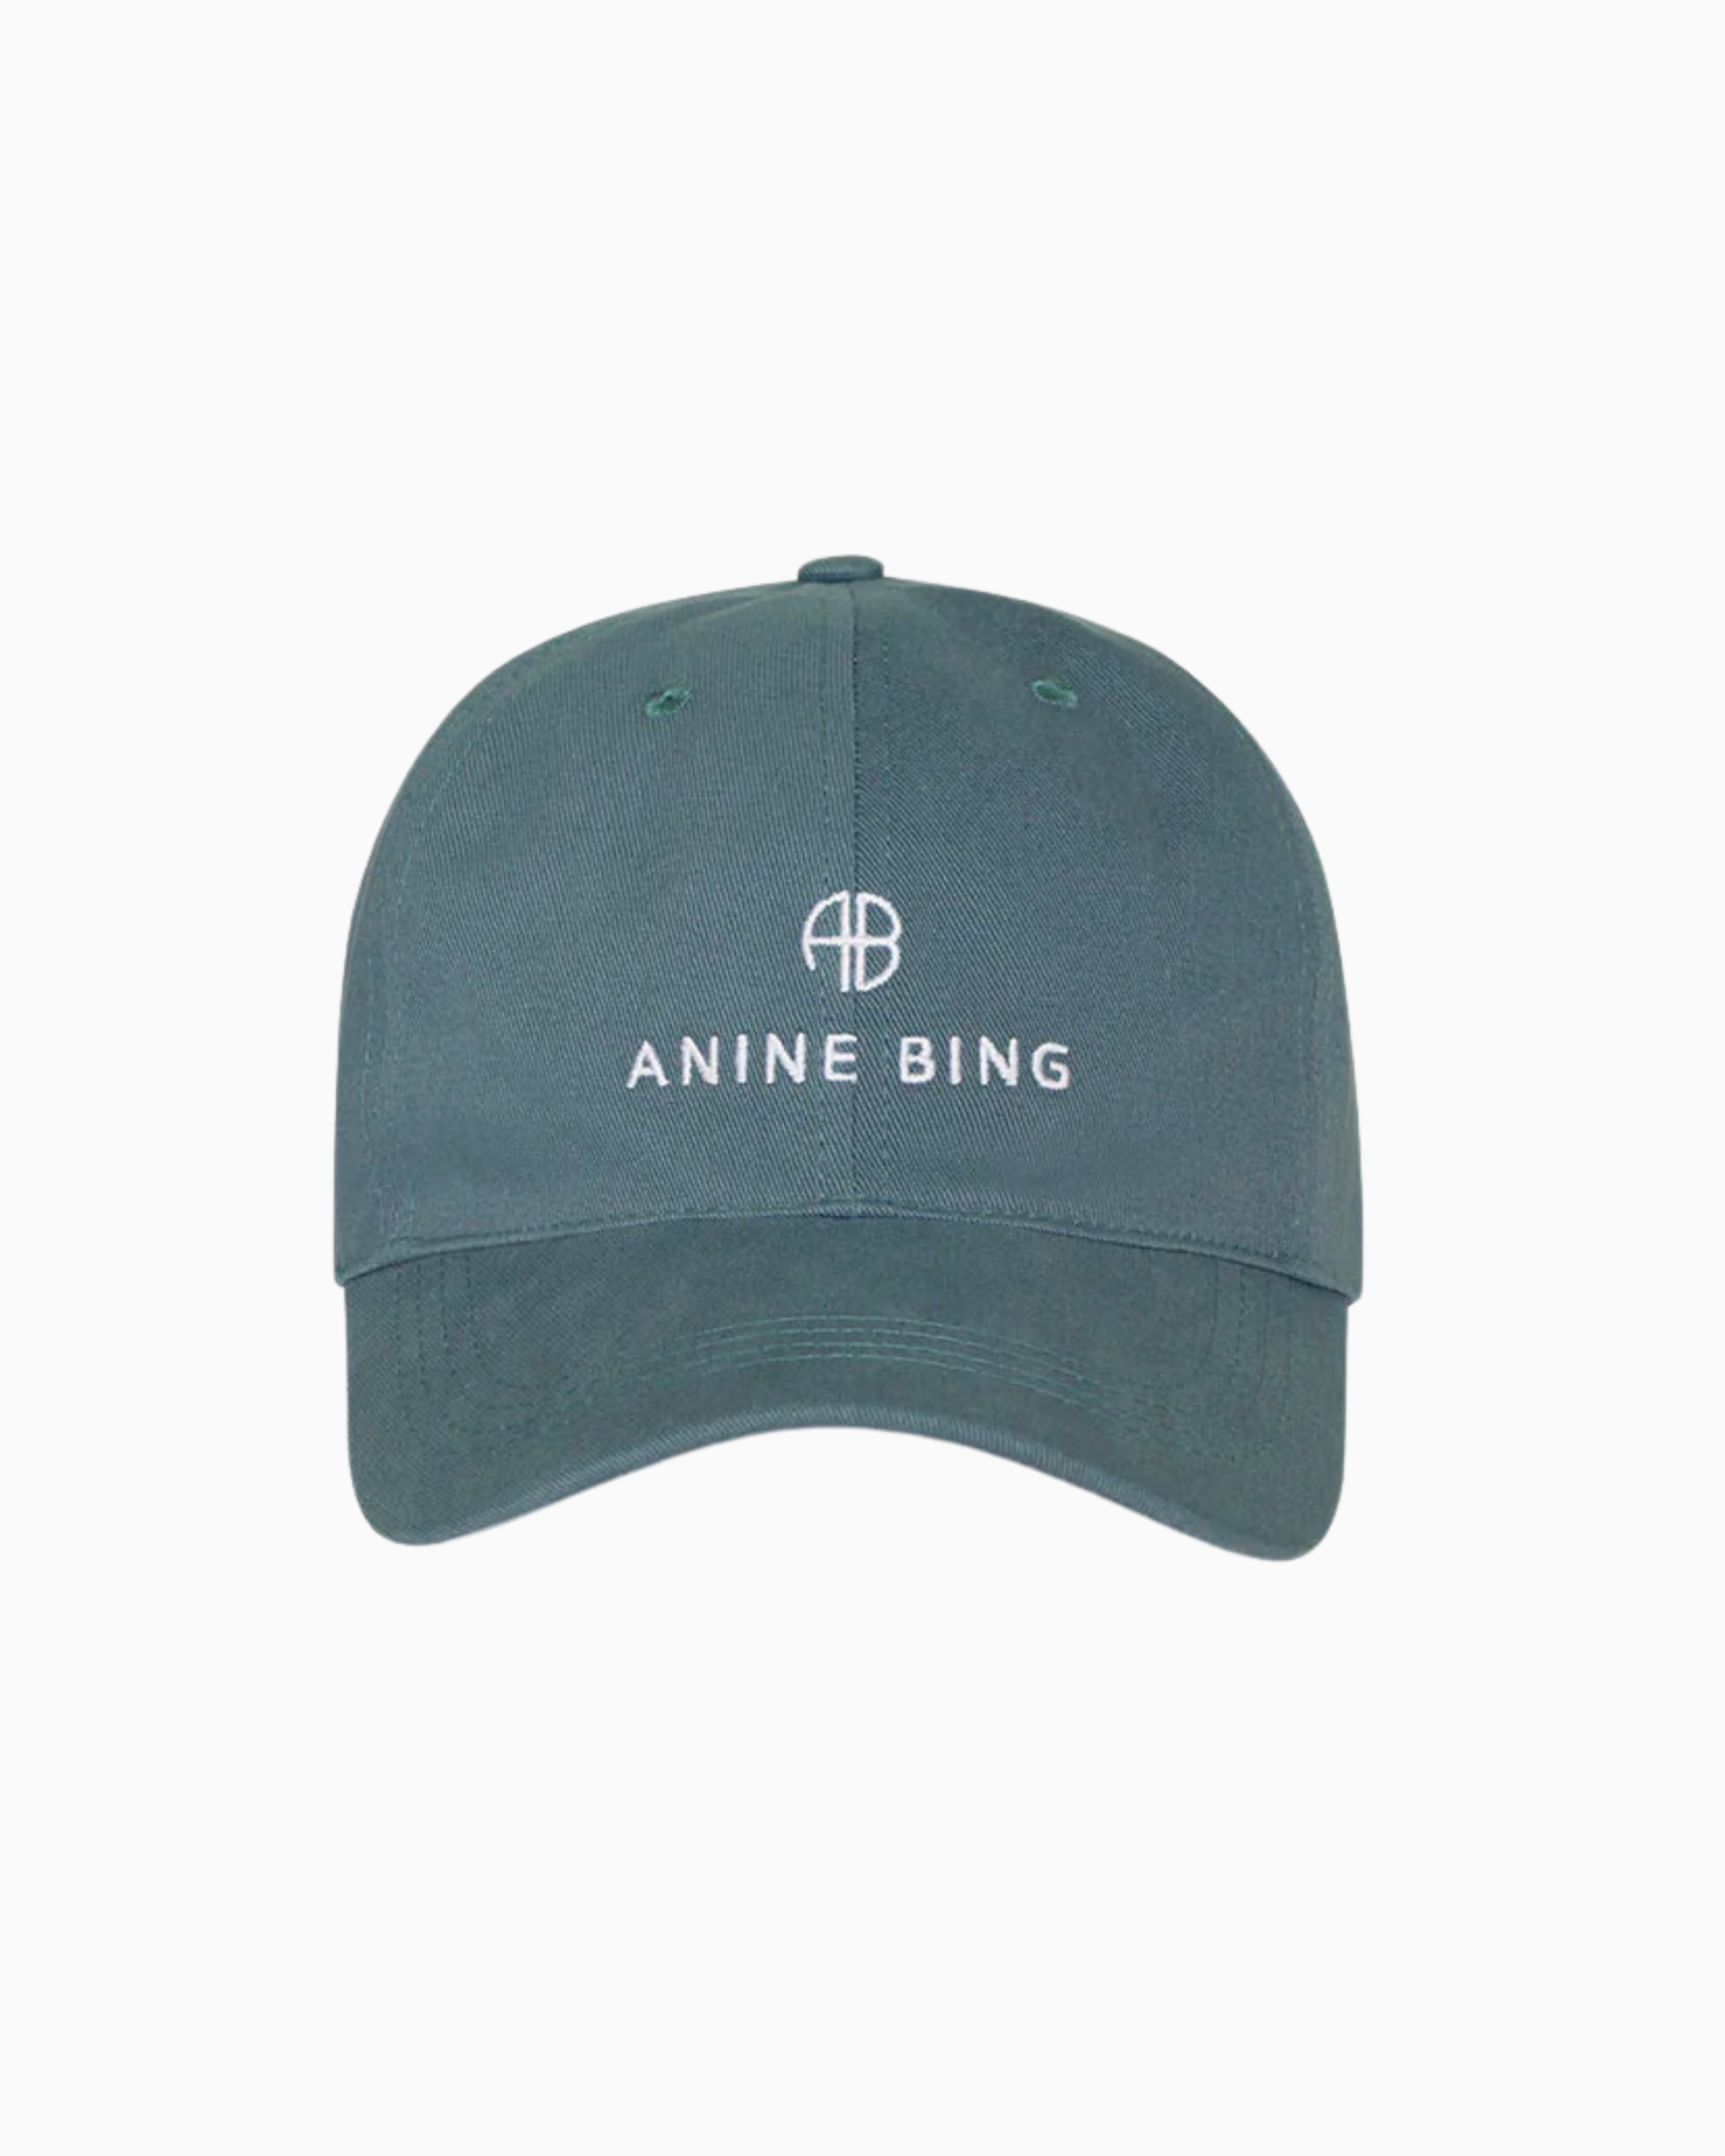 Anine Bing Jeremy Baseball Hat in Dark Sage